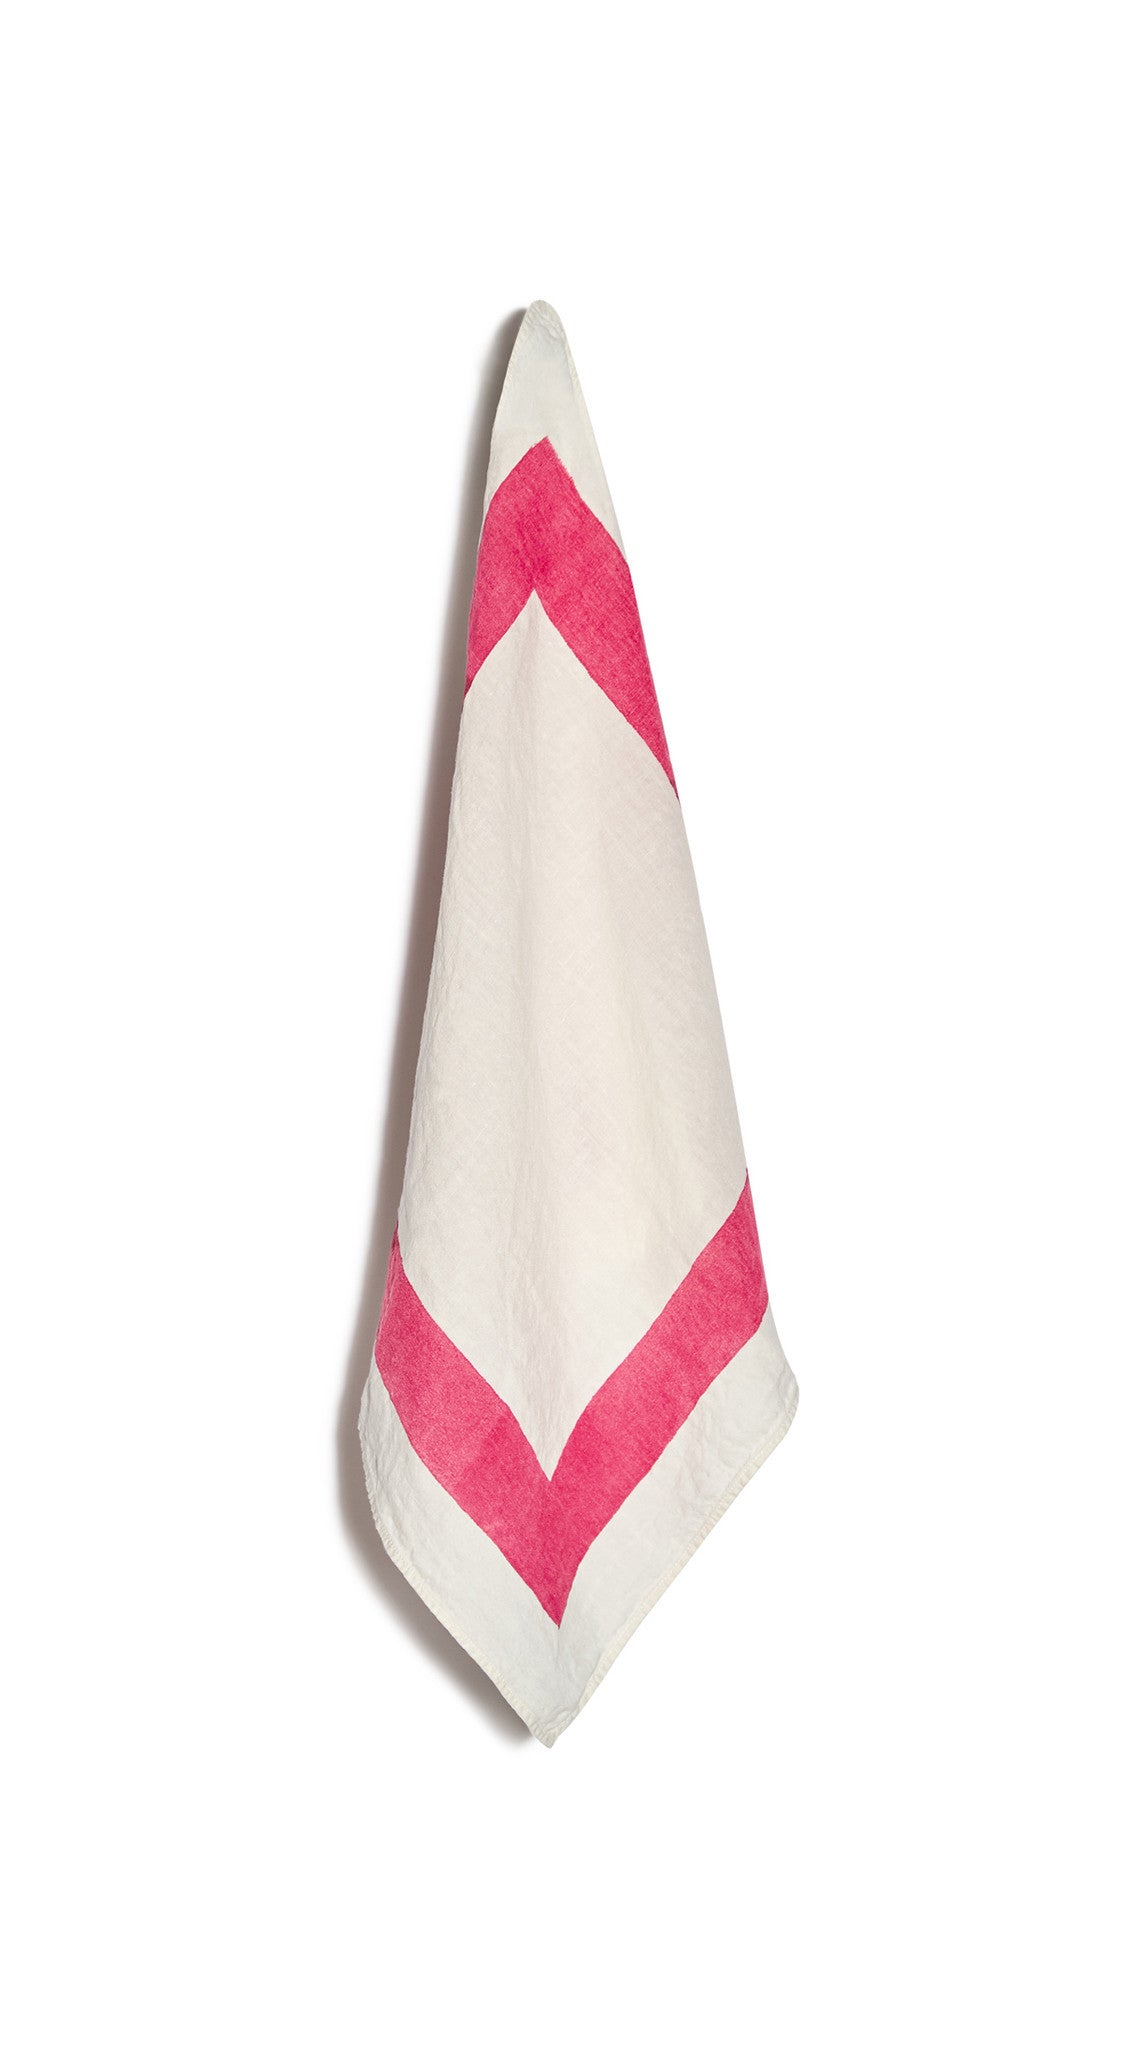 Cornice Linen Napkin in Fuchsia Pink, 50x50cm